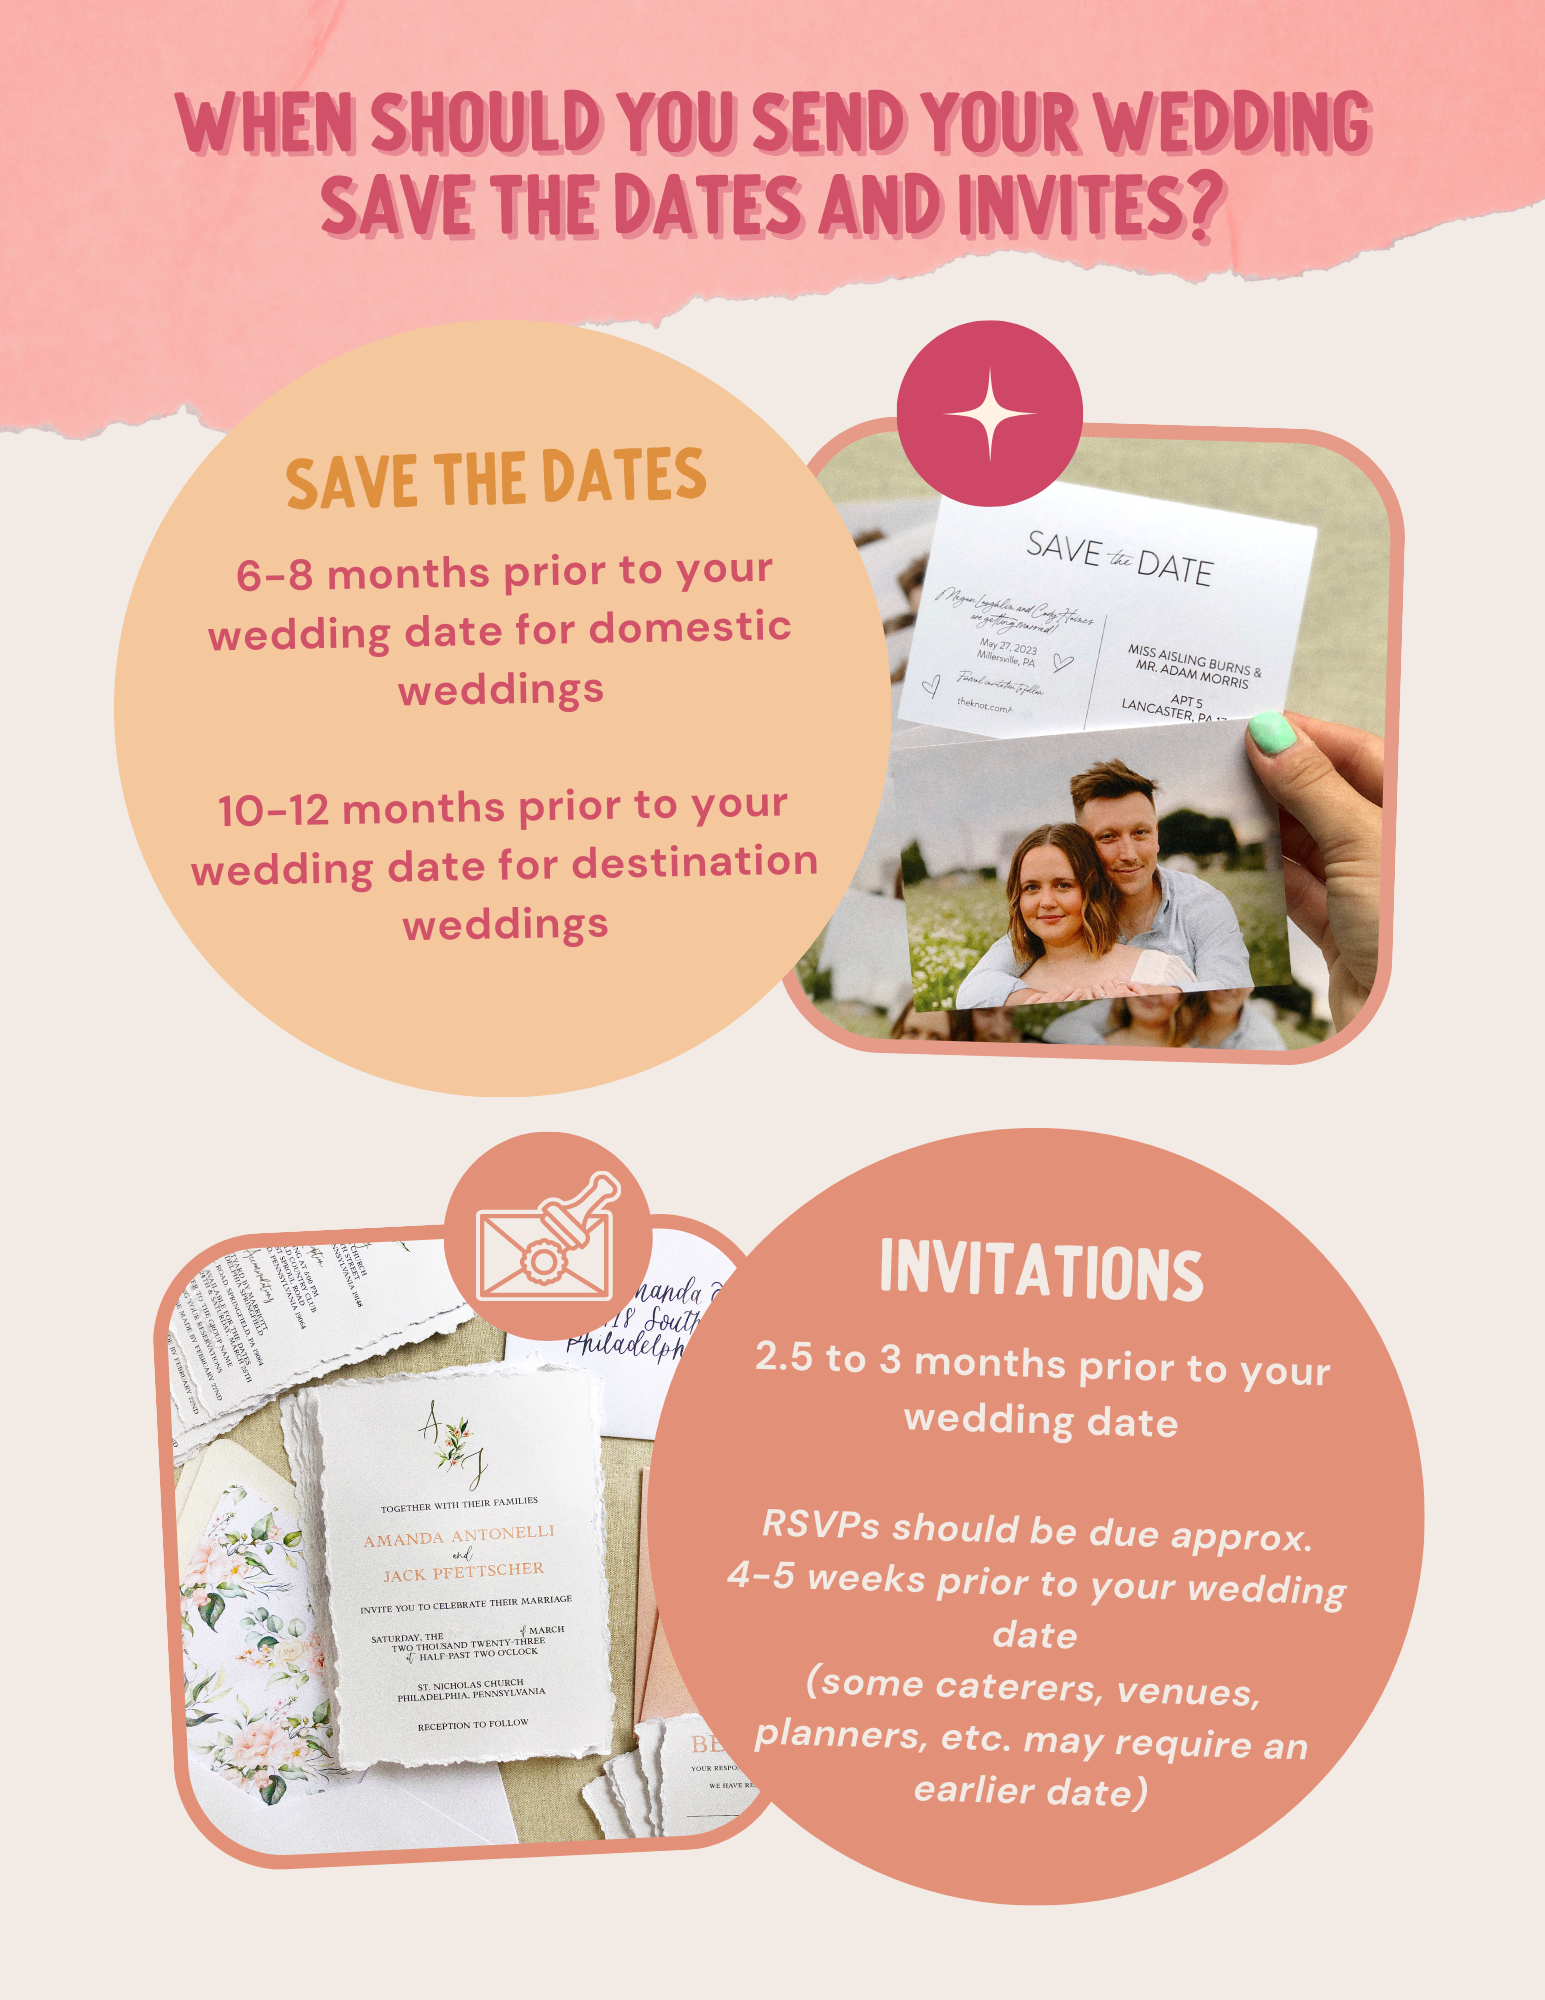 When Should I Send Wedding Invitations?